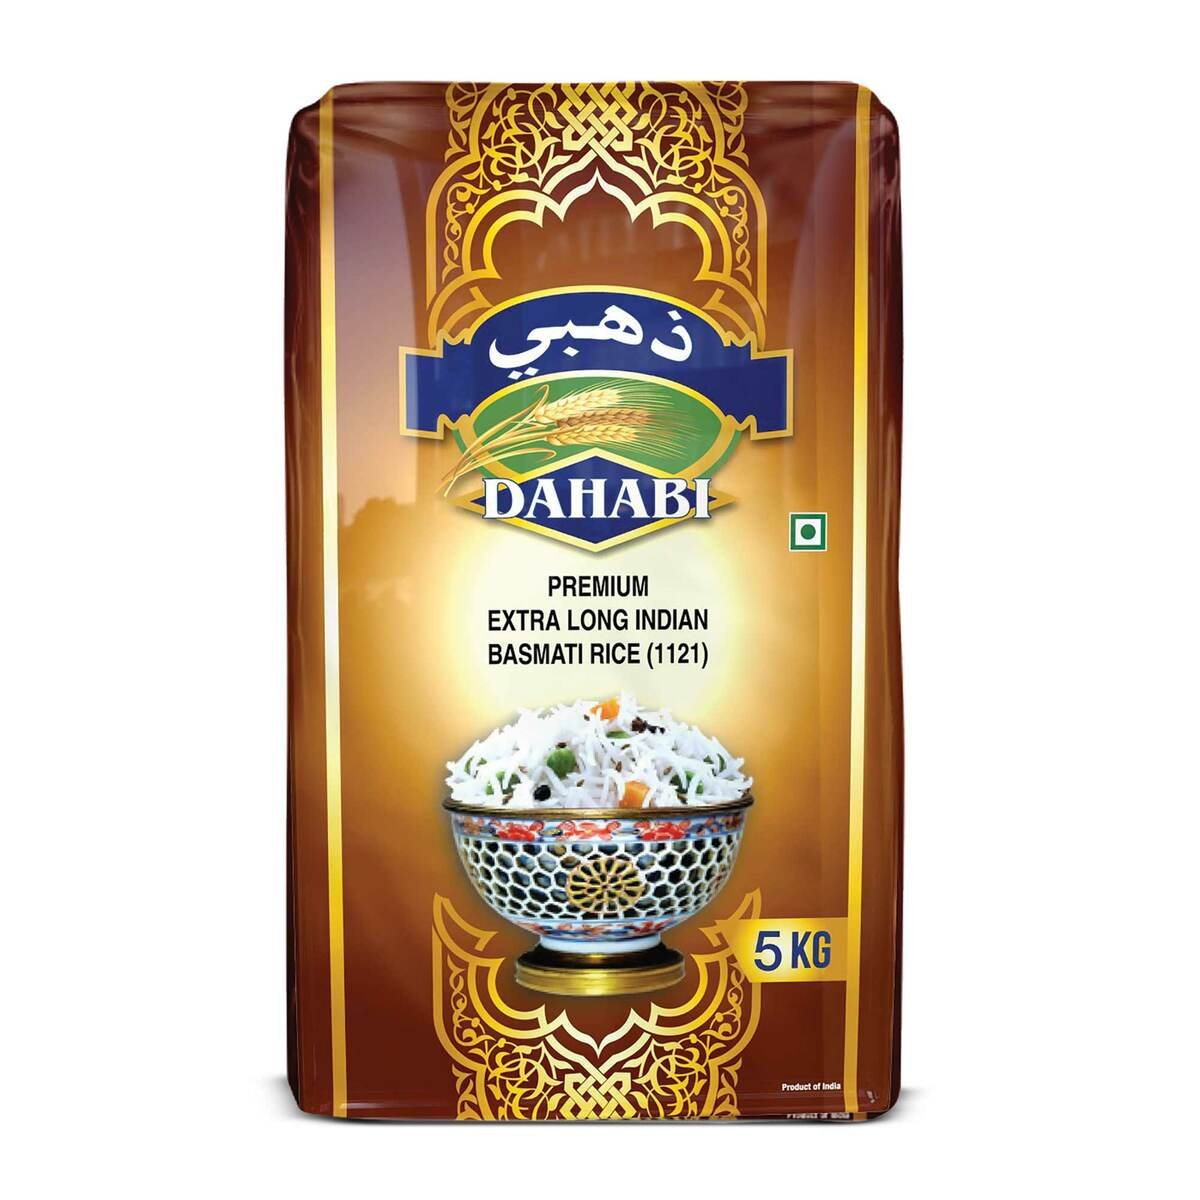 Dahabi Premium Extra Large Indian Basmati Rice 1121 5kg